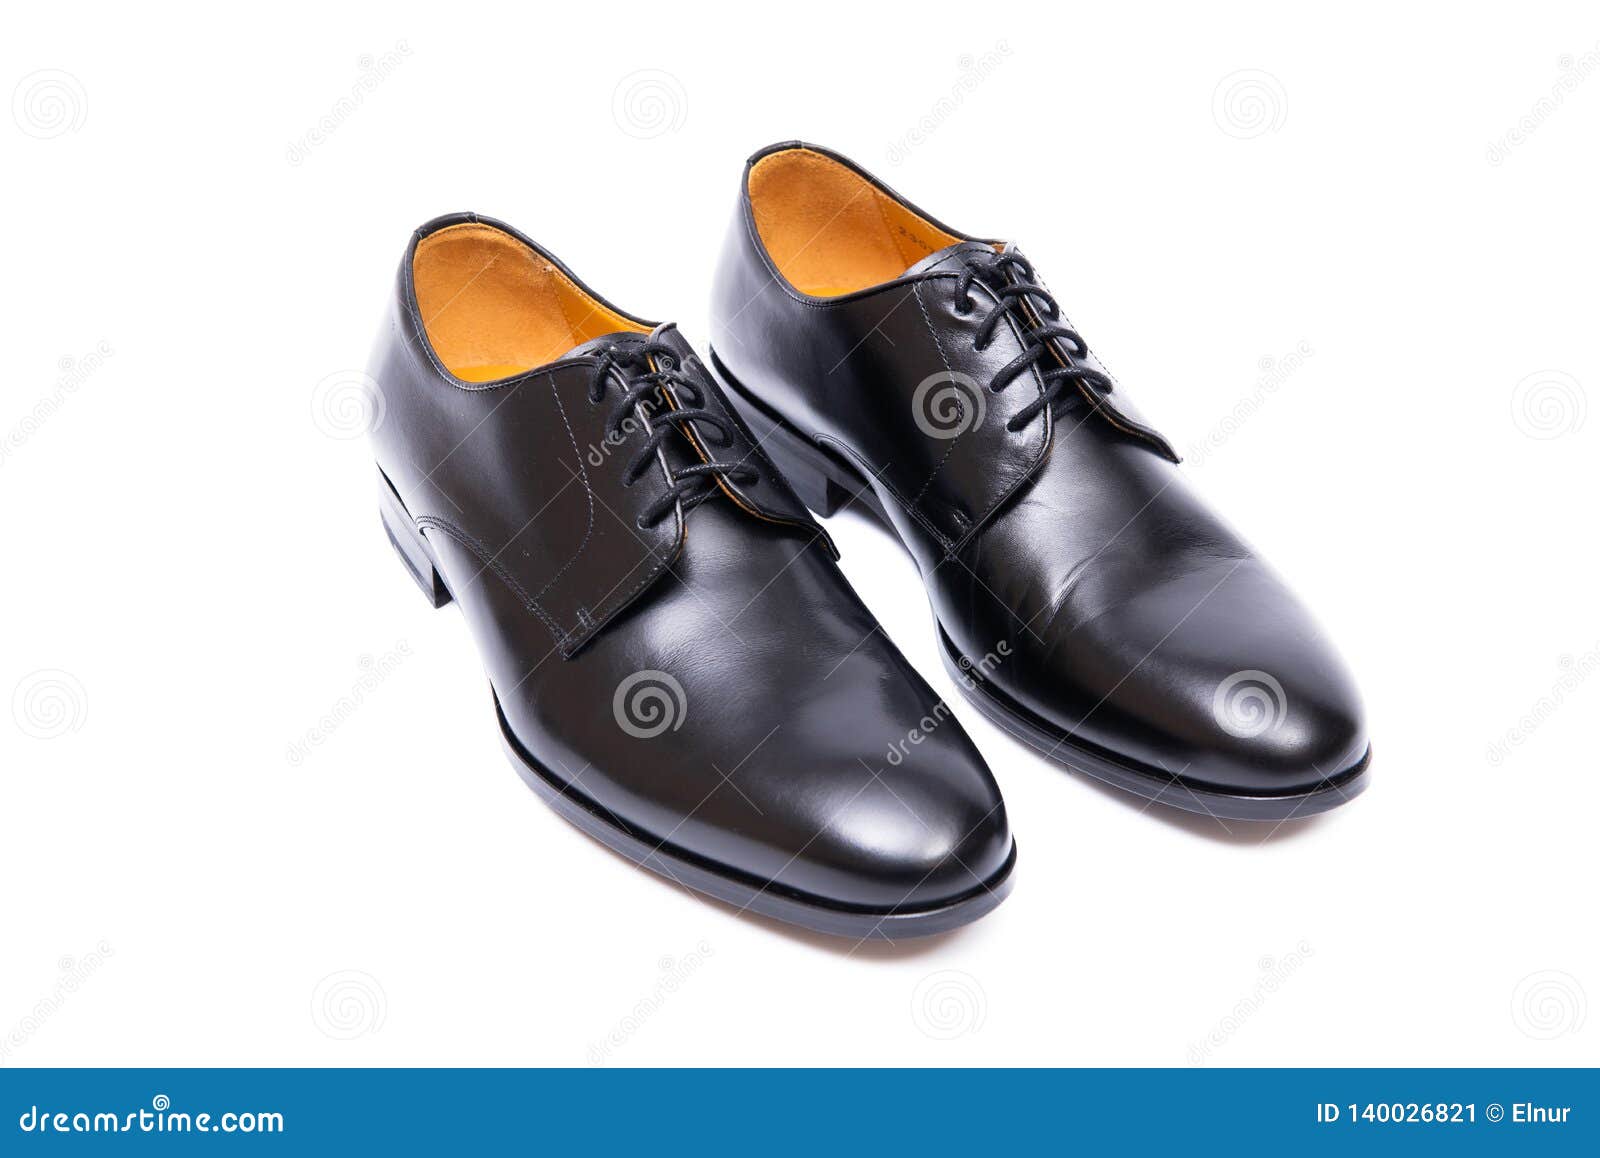 The Black Shoes Isolated on White Background Stock Image - Image of ...